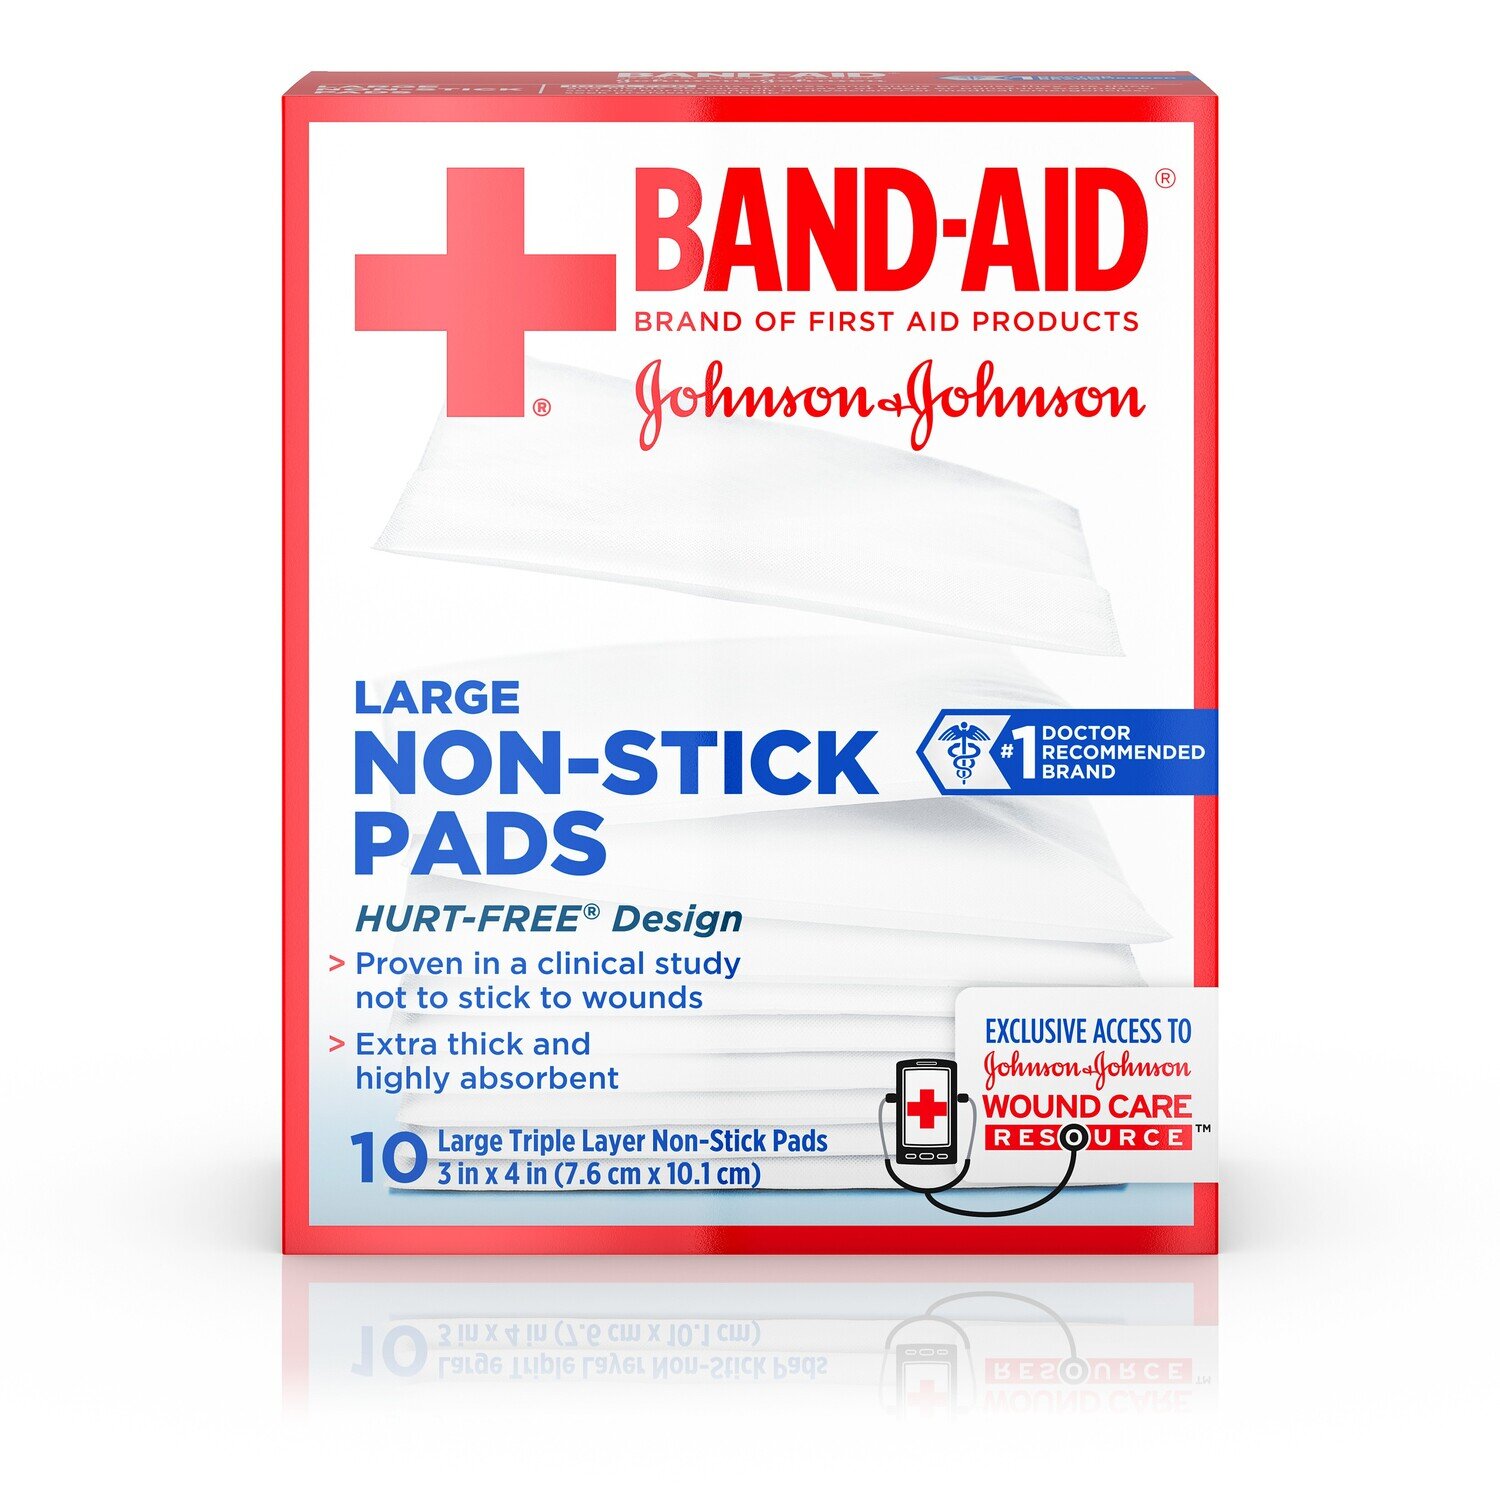 HURT-FREE® Non-Stick Gauze Pads